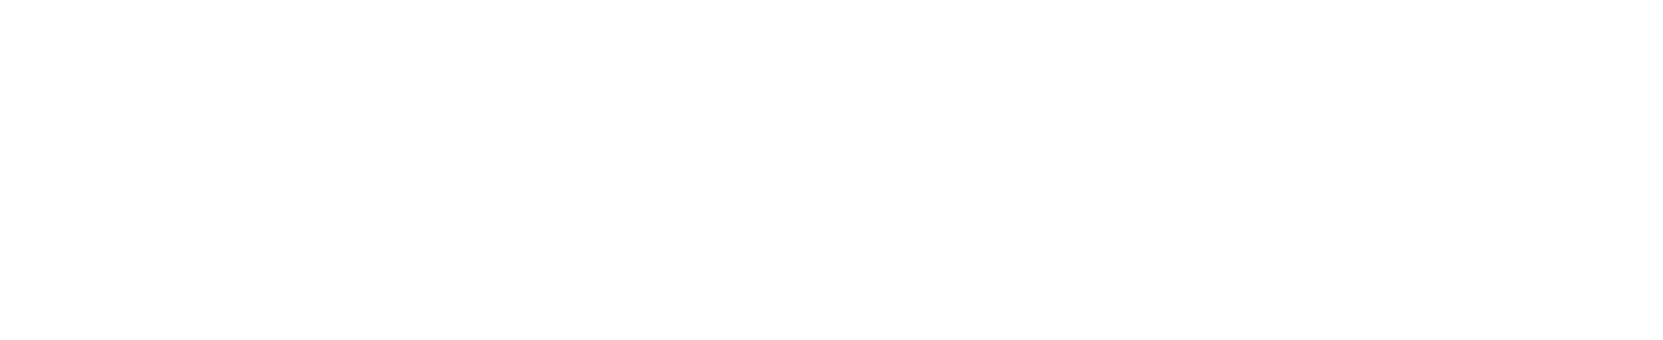 WordPress logotype standard white new